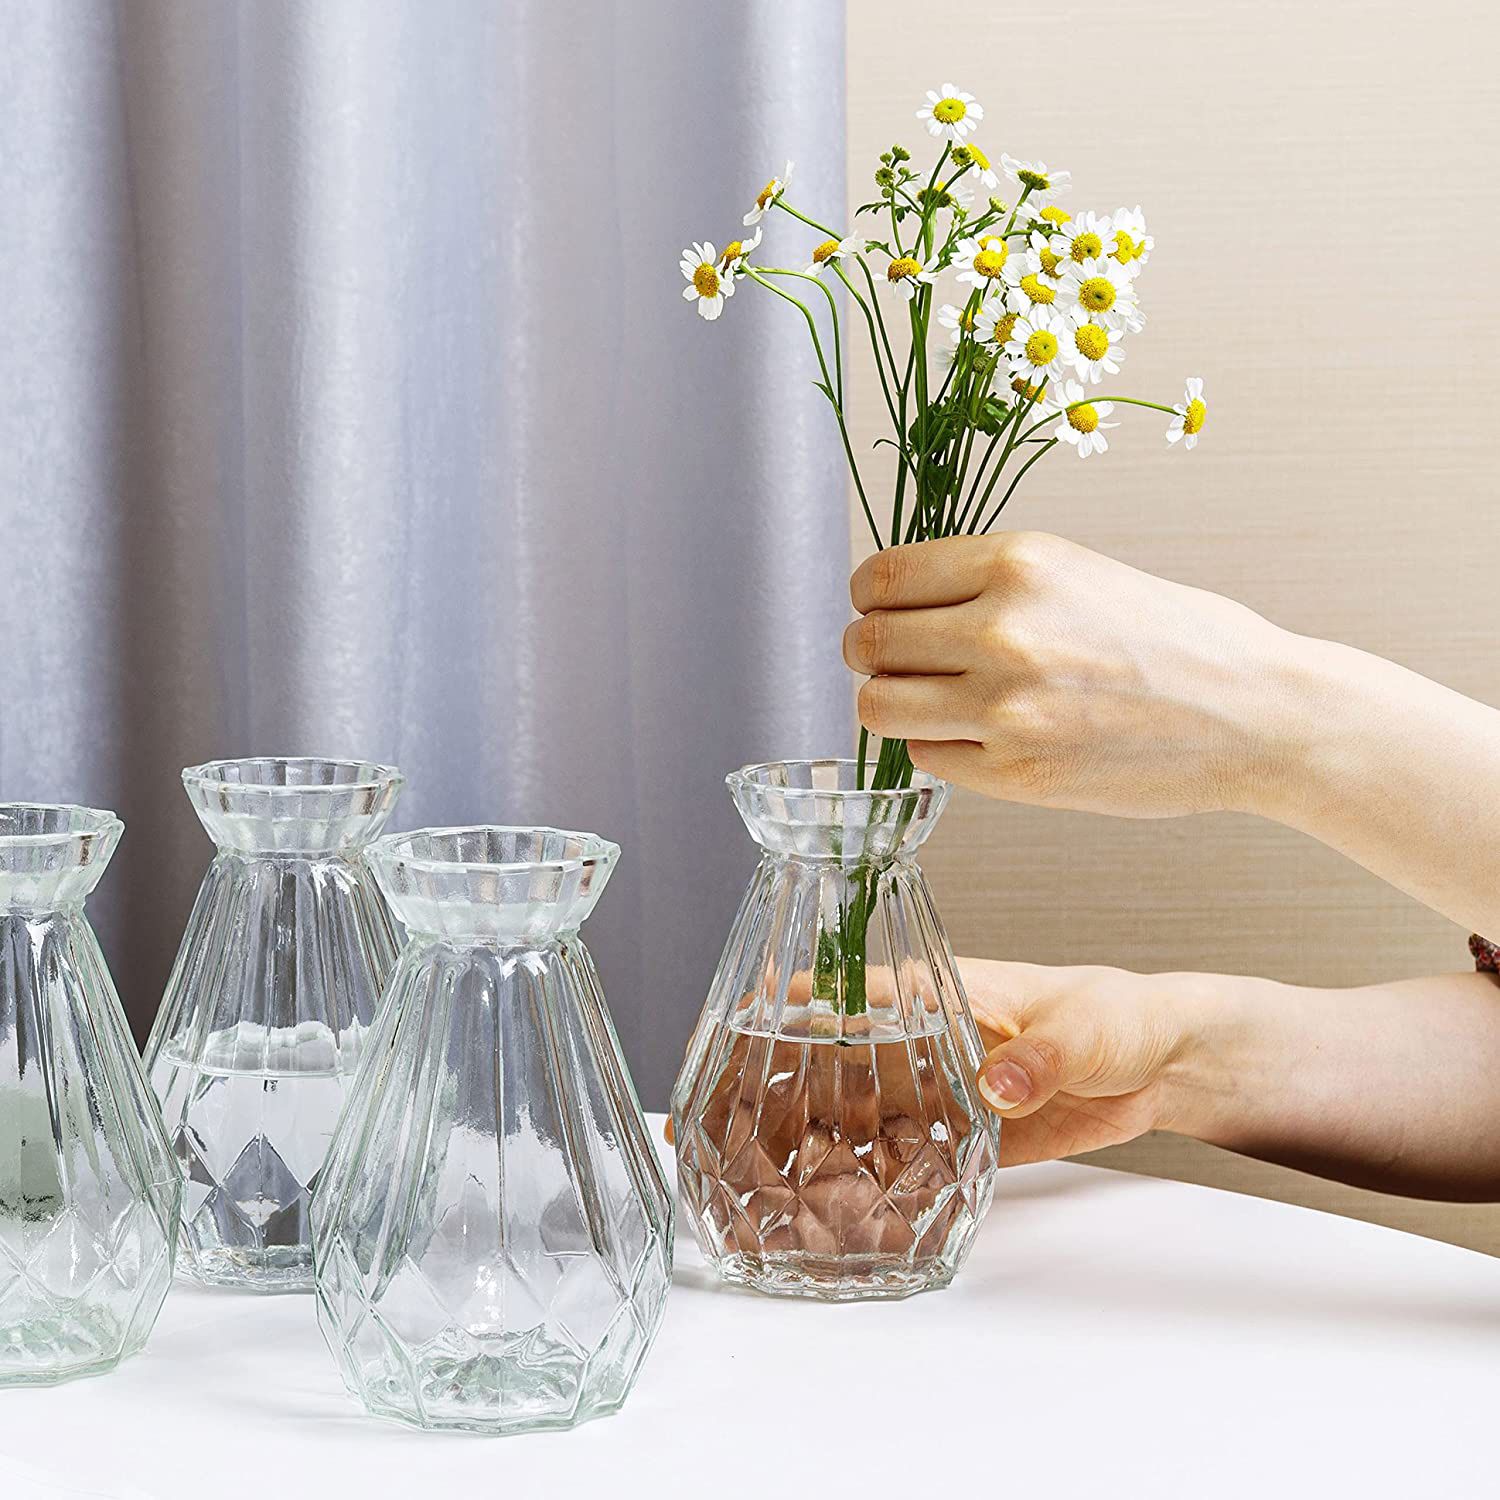 NEW! MyGift Decorative Clear Glass Vase, Diamond-Faceted Flower Bud Vases, Set of 6 / Florero